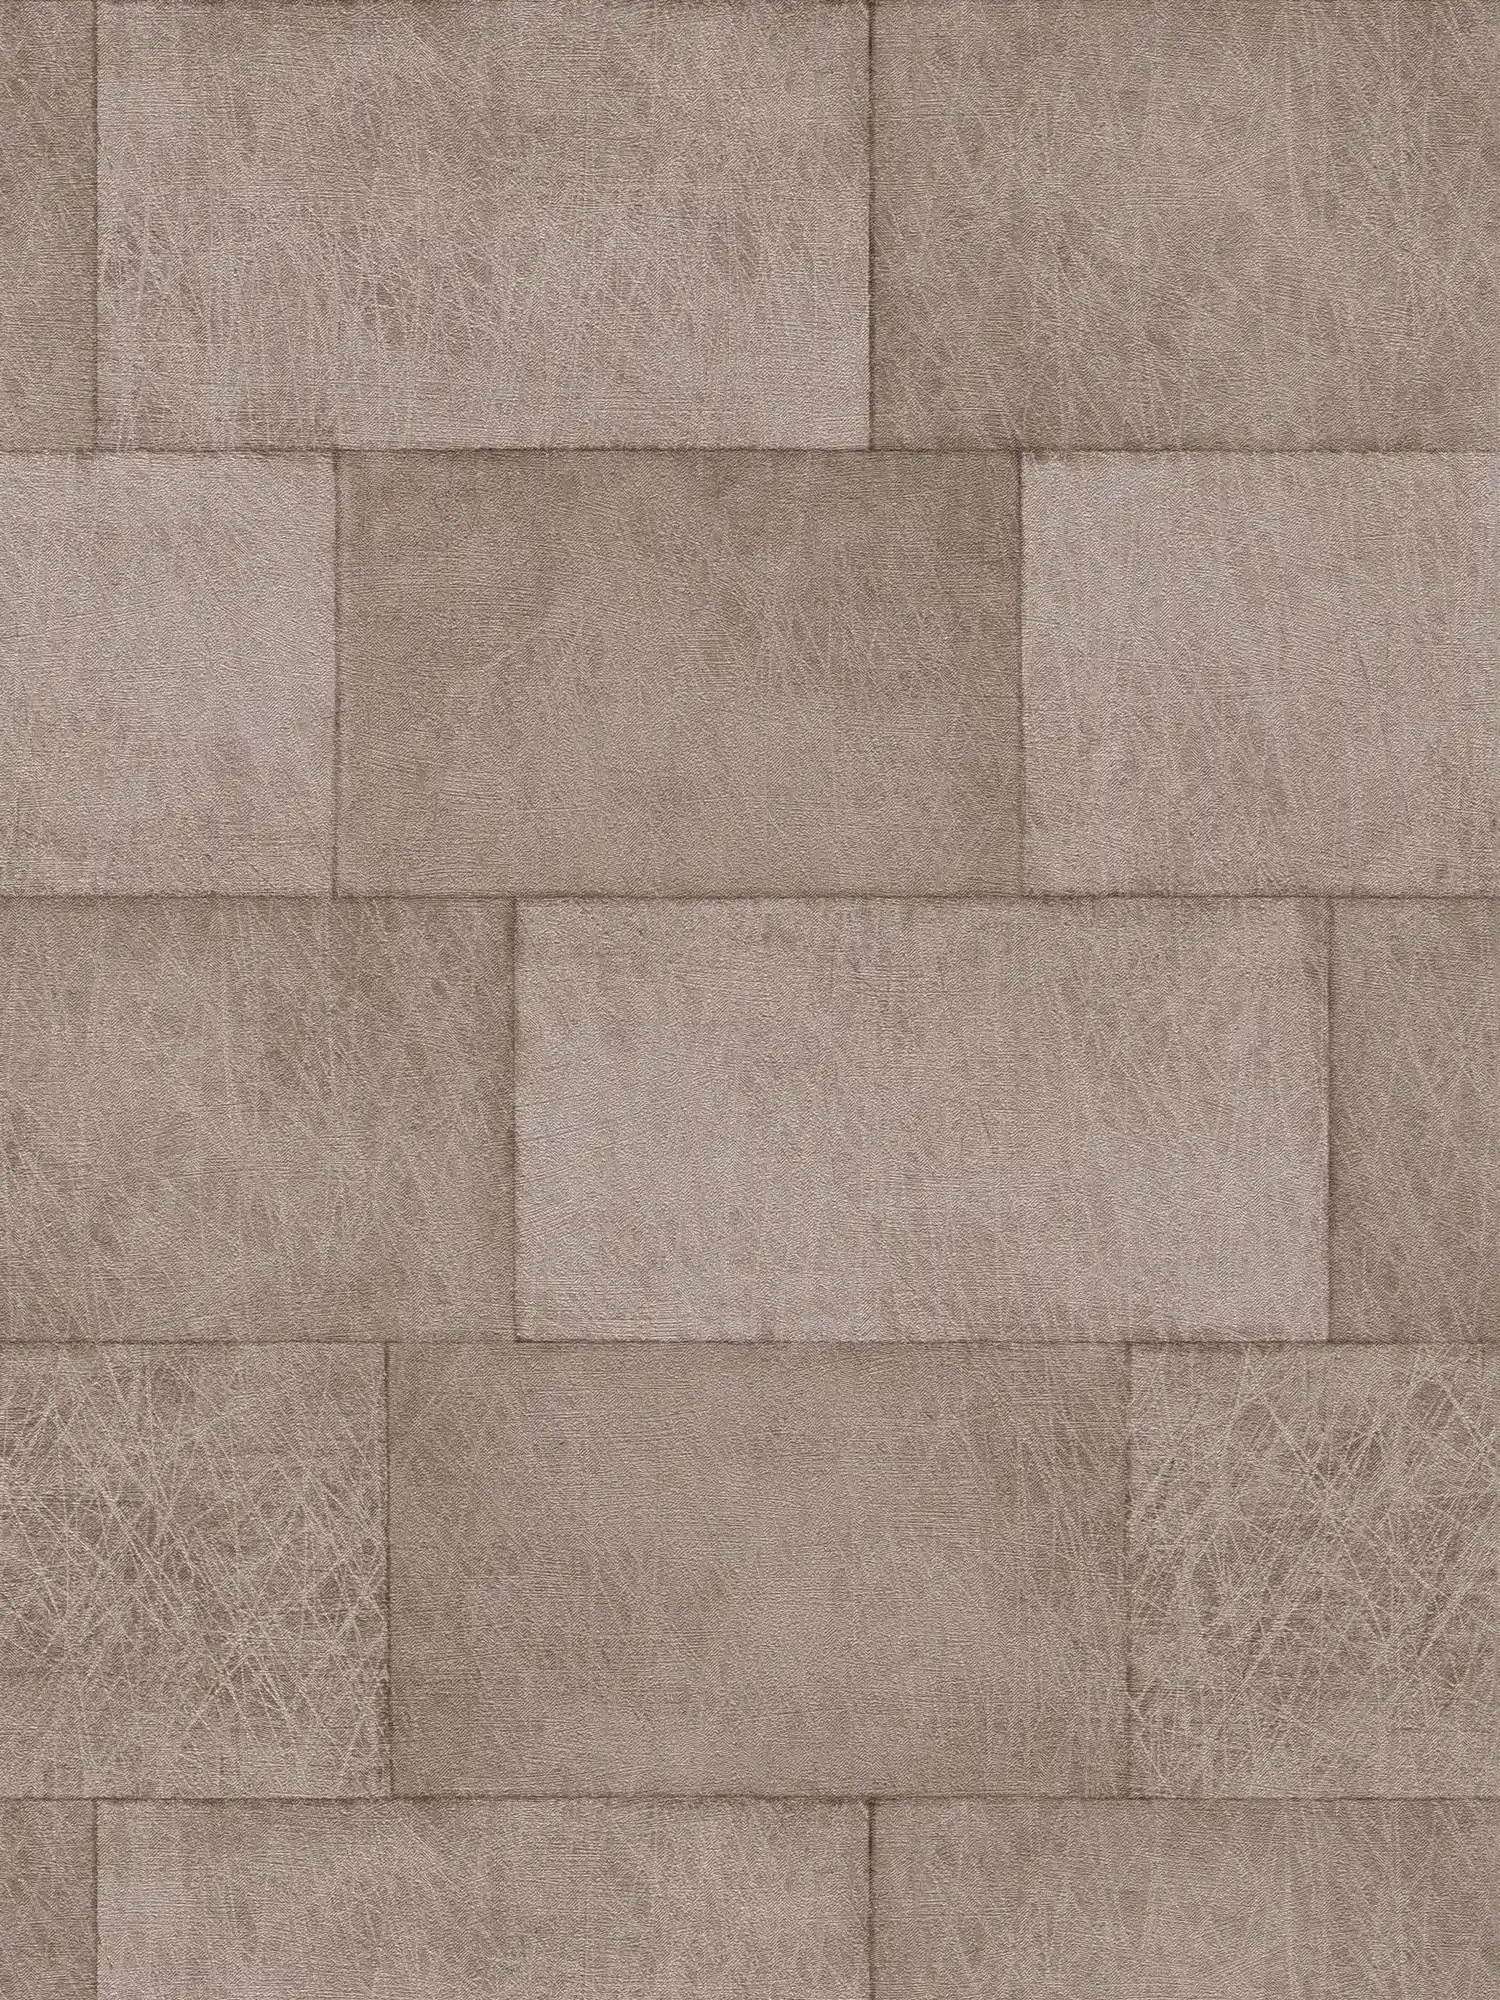 Non-woven wallpaper metallic design with tile pattern - brown
